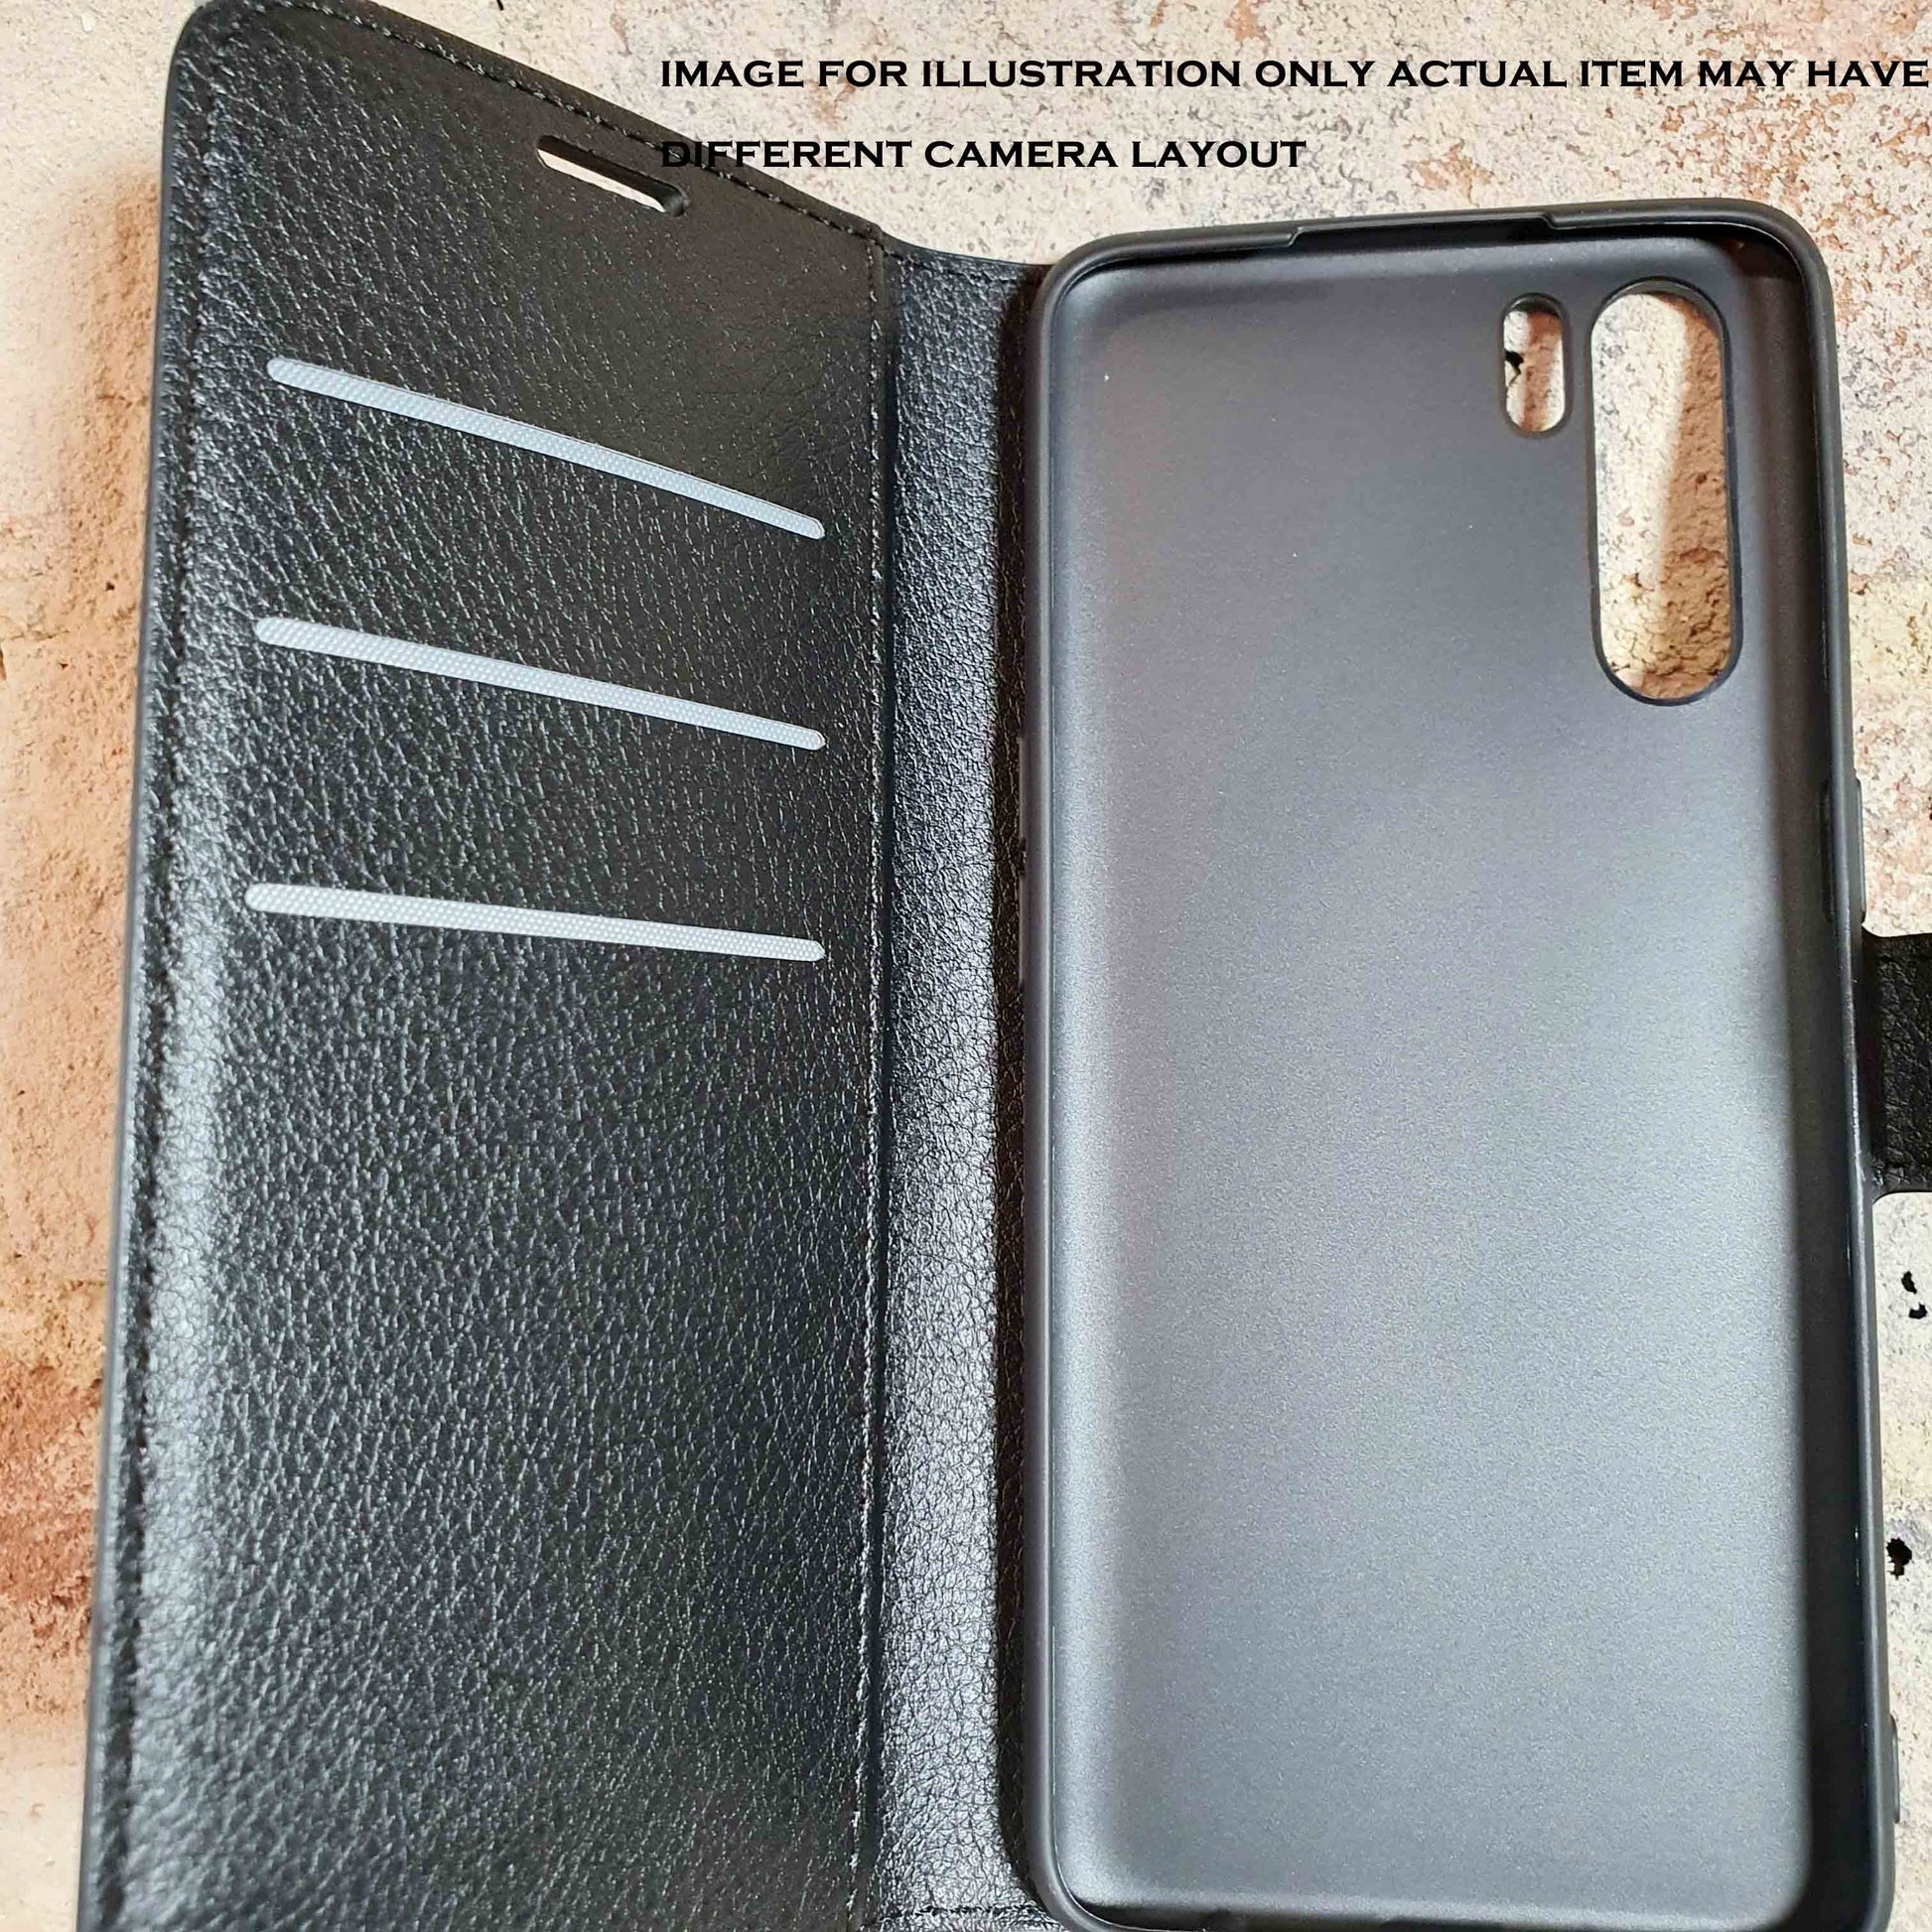 Blacktech Wallet Case Black with ID Cards Pockets for Galaxy A11 A20 A21s A51 A31 A71 4G Folio-Phone Case-Blacktech-www.PhoneGuy.com.au